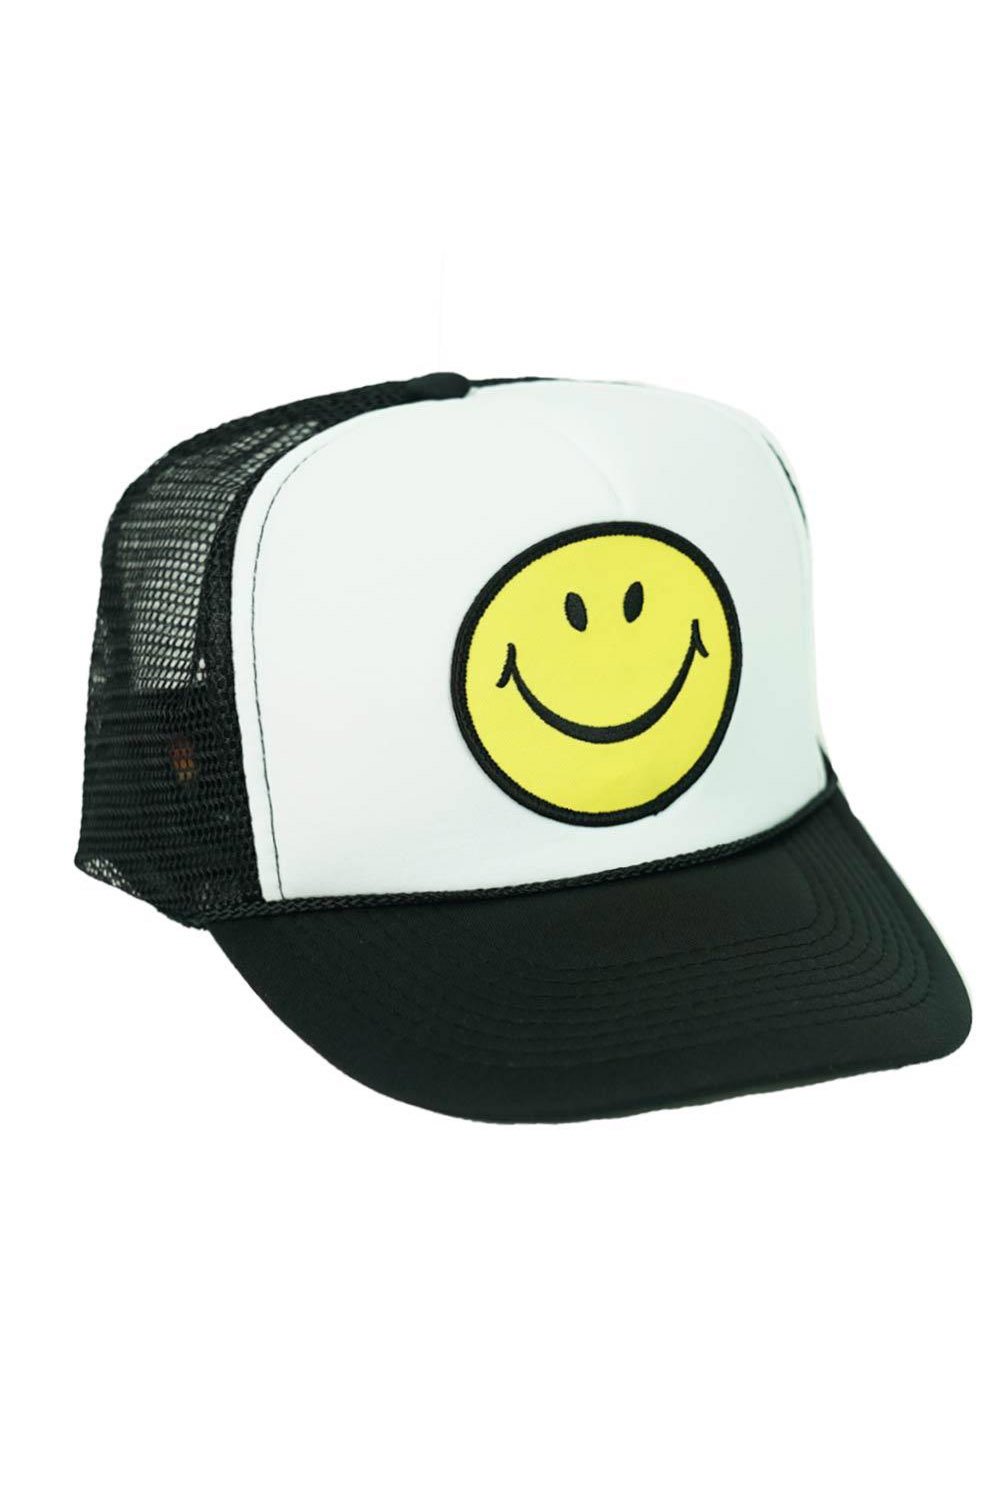 SMILEY VINTAGE TRUCKER HAT HATS Aviator Nation OS BLACK//WHITE//BLACK 